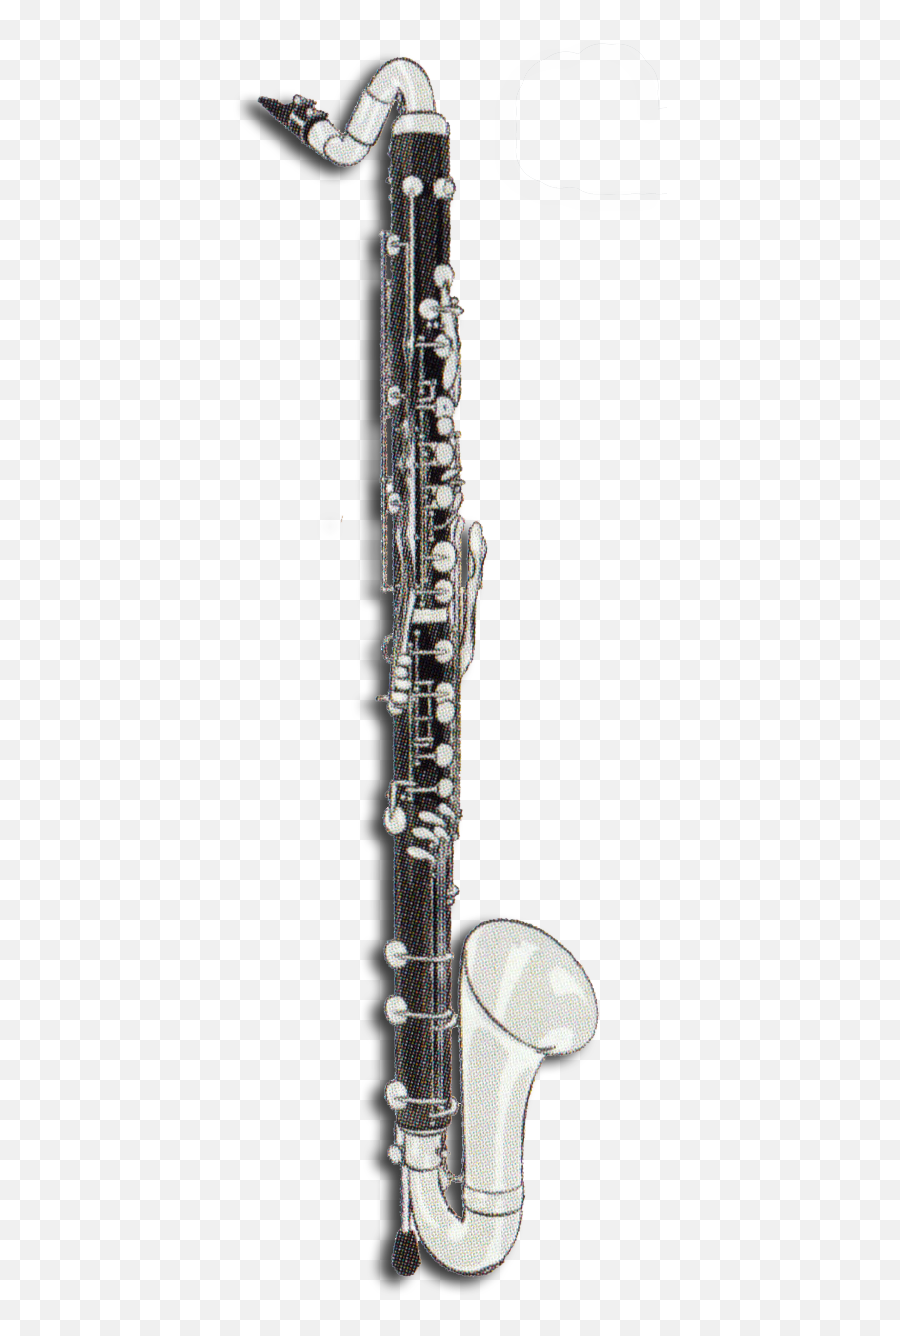 Bass Clarinet - Hibike Euphonium Bass Clarinet Png,Clarinet Png